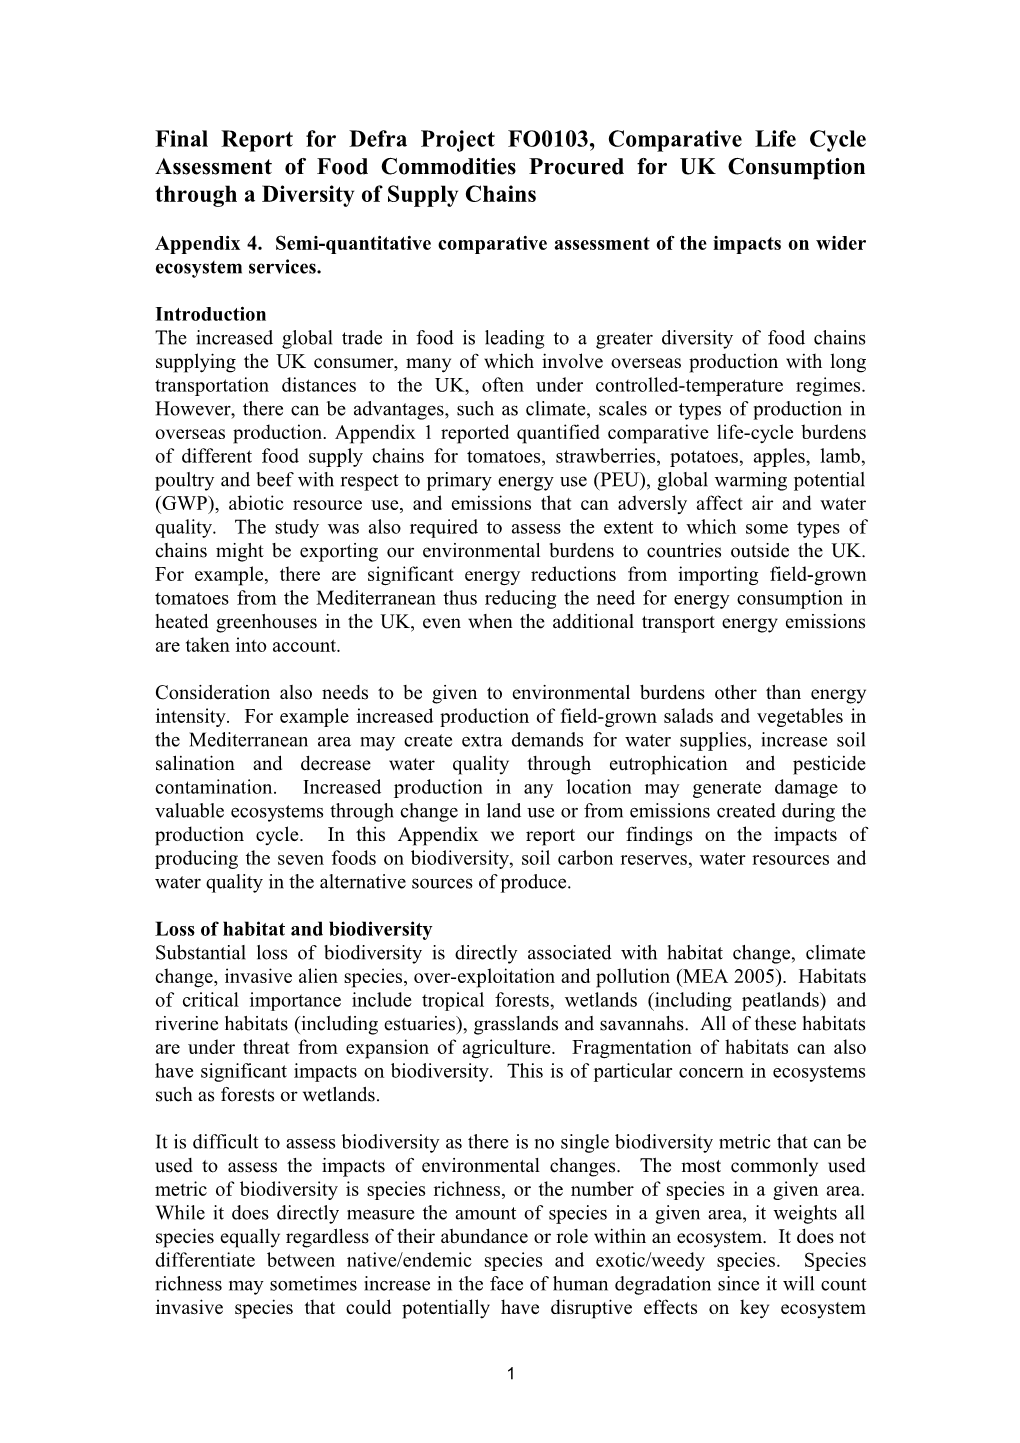 Appendix 4. Semi-Quantitative Comparative Assessment of the Impacts on Wider Ecosystem